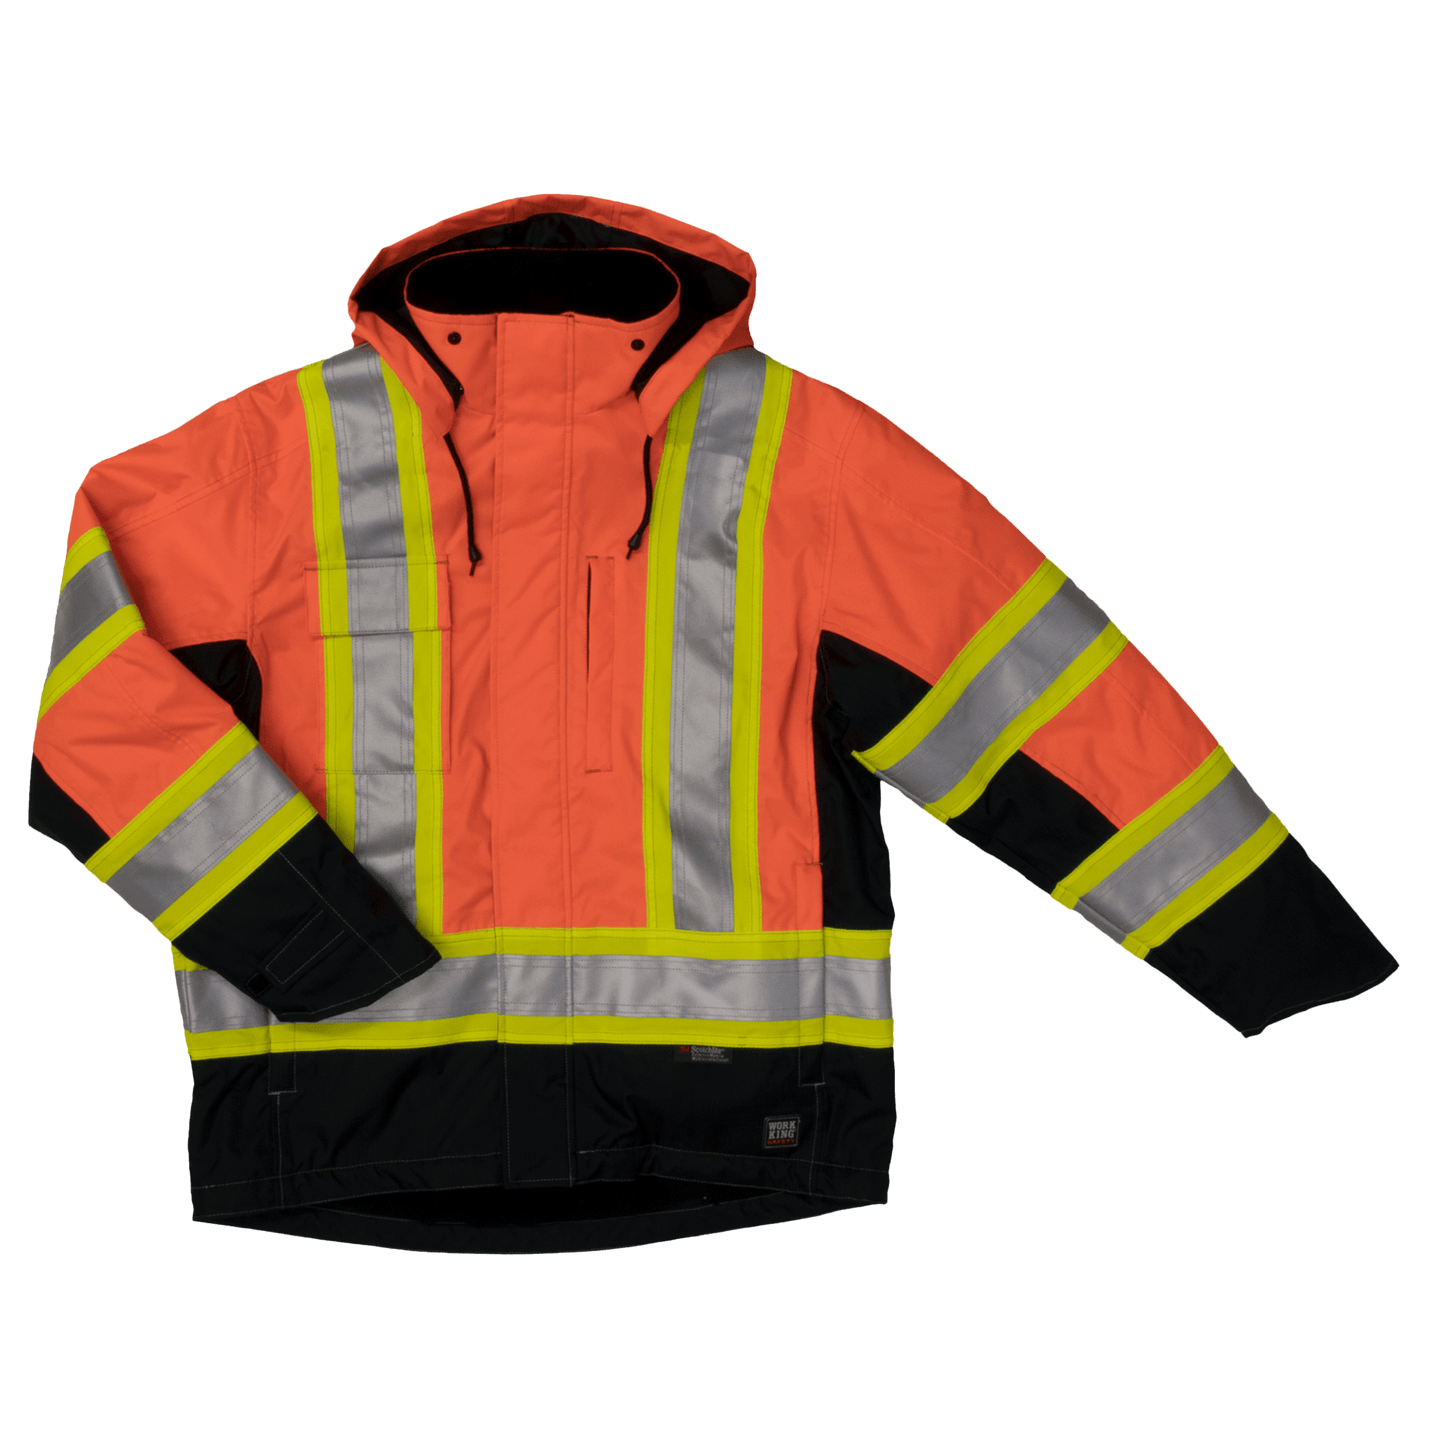 Tough Duck Fleece Lined Safety Jacket - S245 - Fluorescent Orange